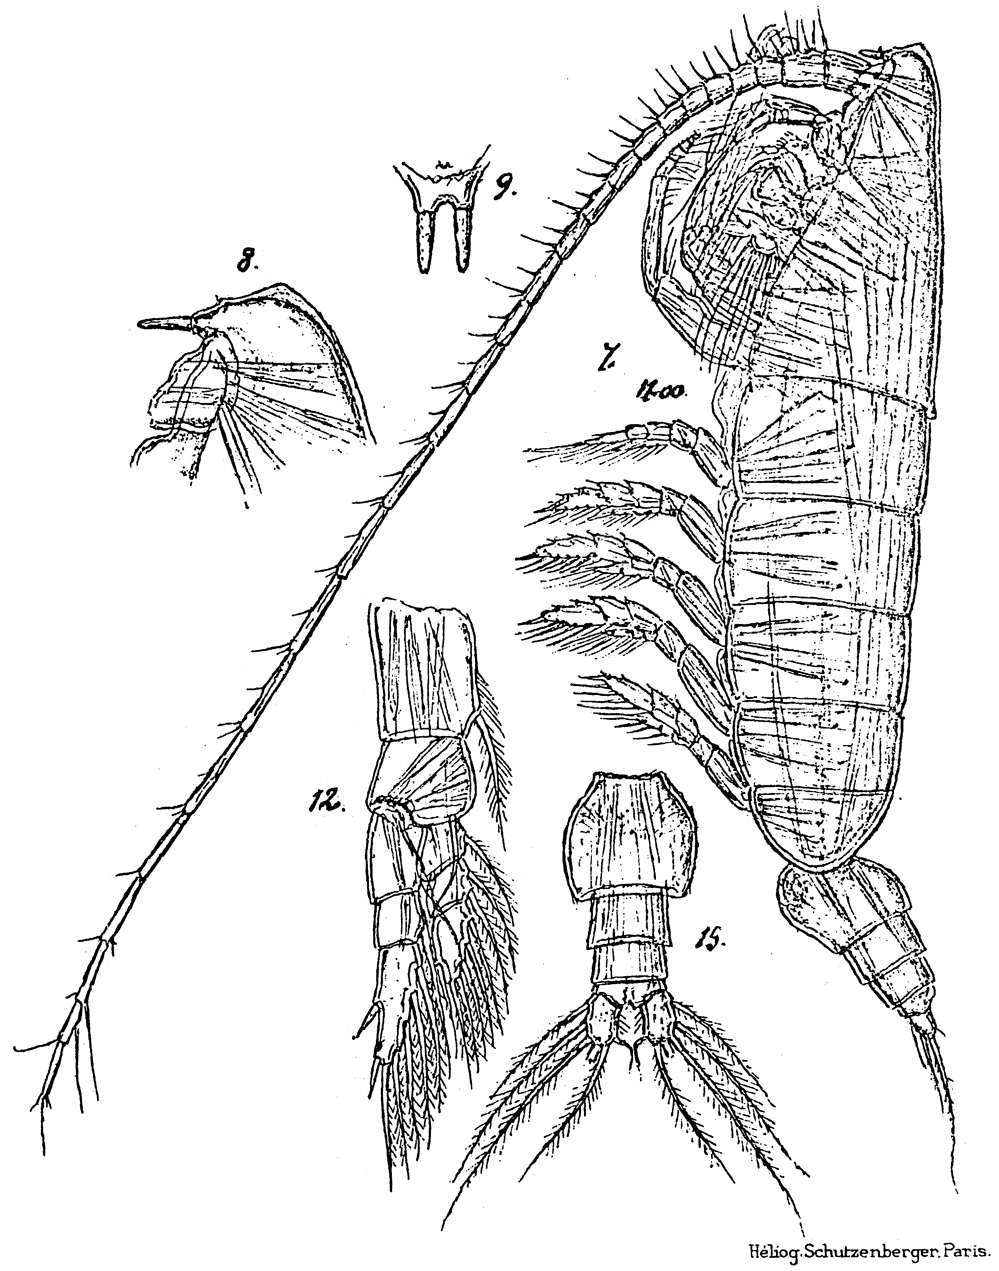 Species Elenacalanus princeps - Plate 5 of morphological figures